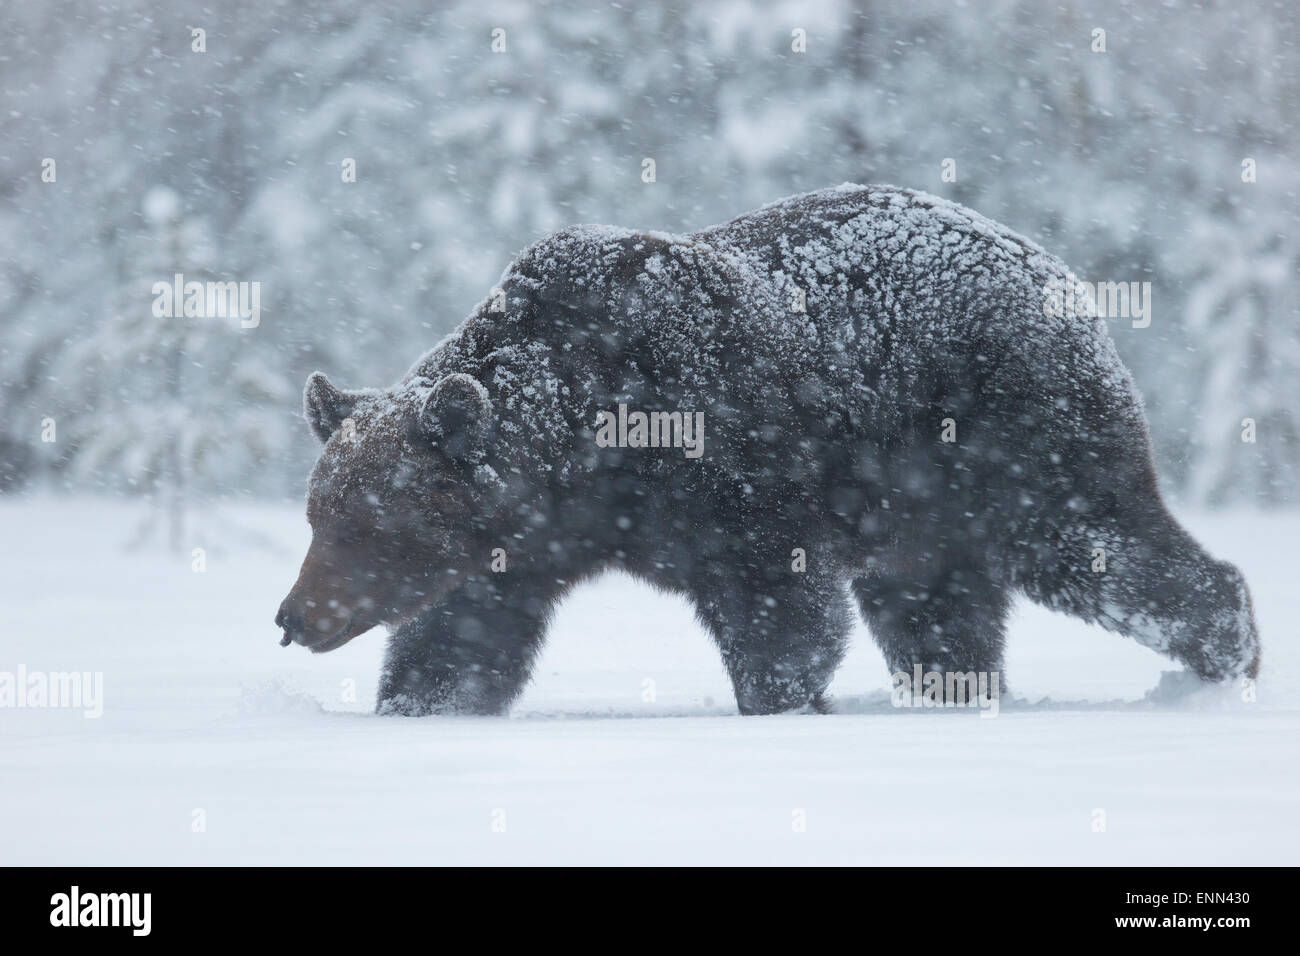 Europäischer Braunbär Ursus Arctos Arctos, während der Frühlingsmonate, Finnland. Stockfoto